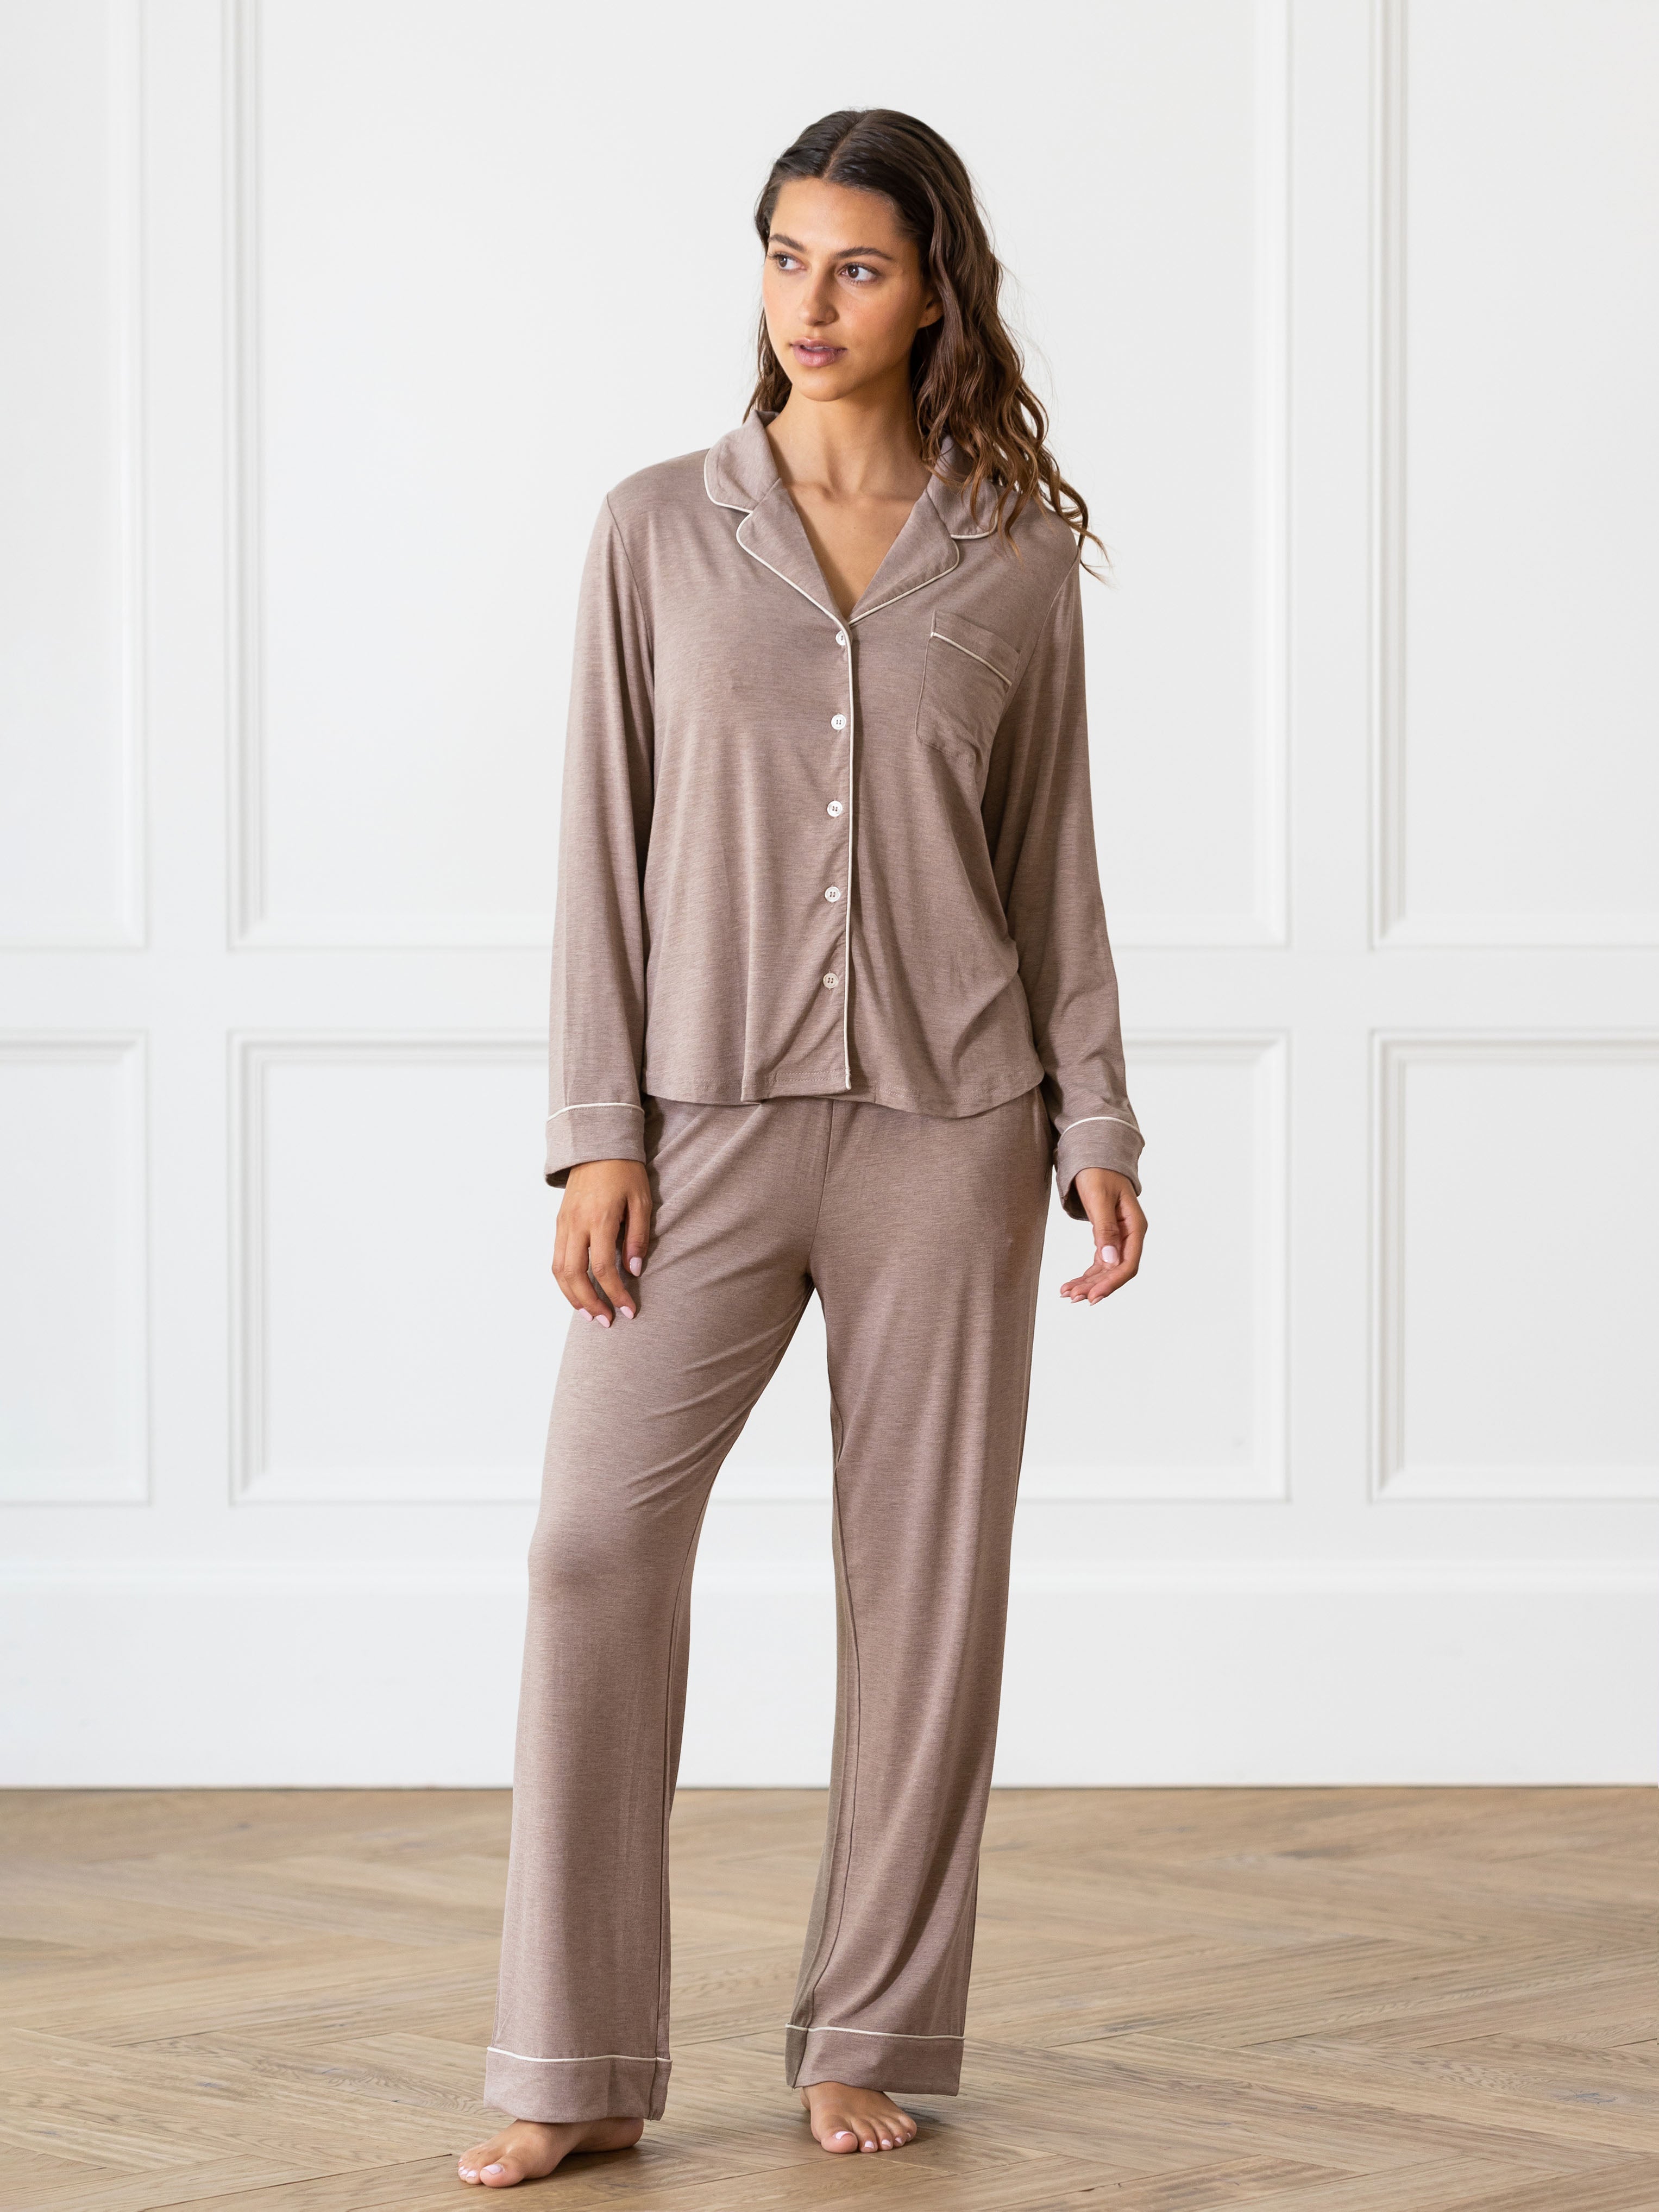 LV Pajama set, Women's Fashion, Dresses & Sets, Sets or